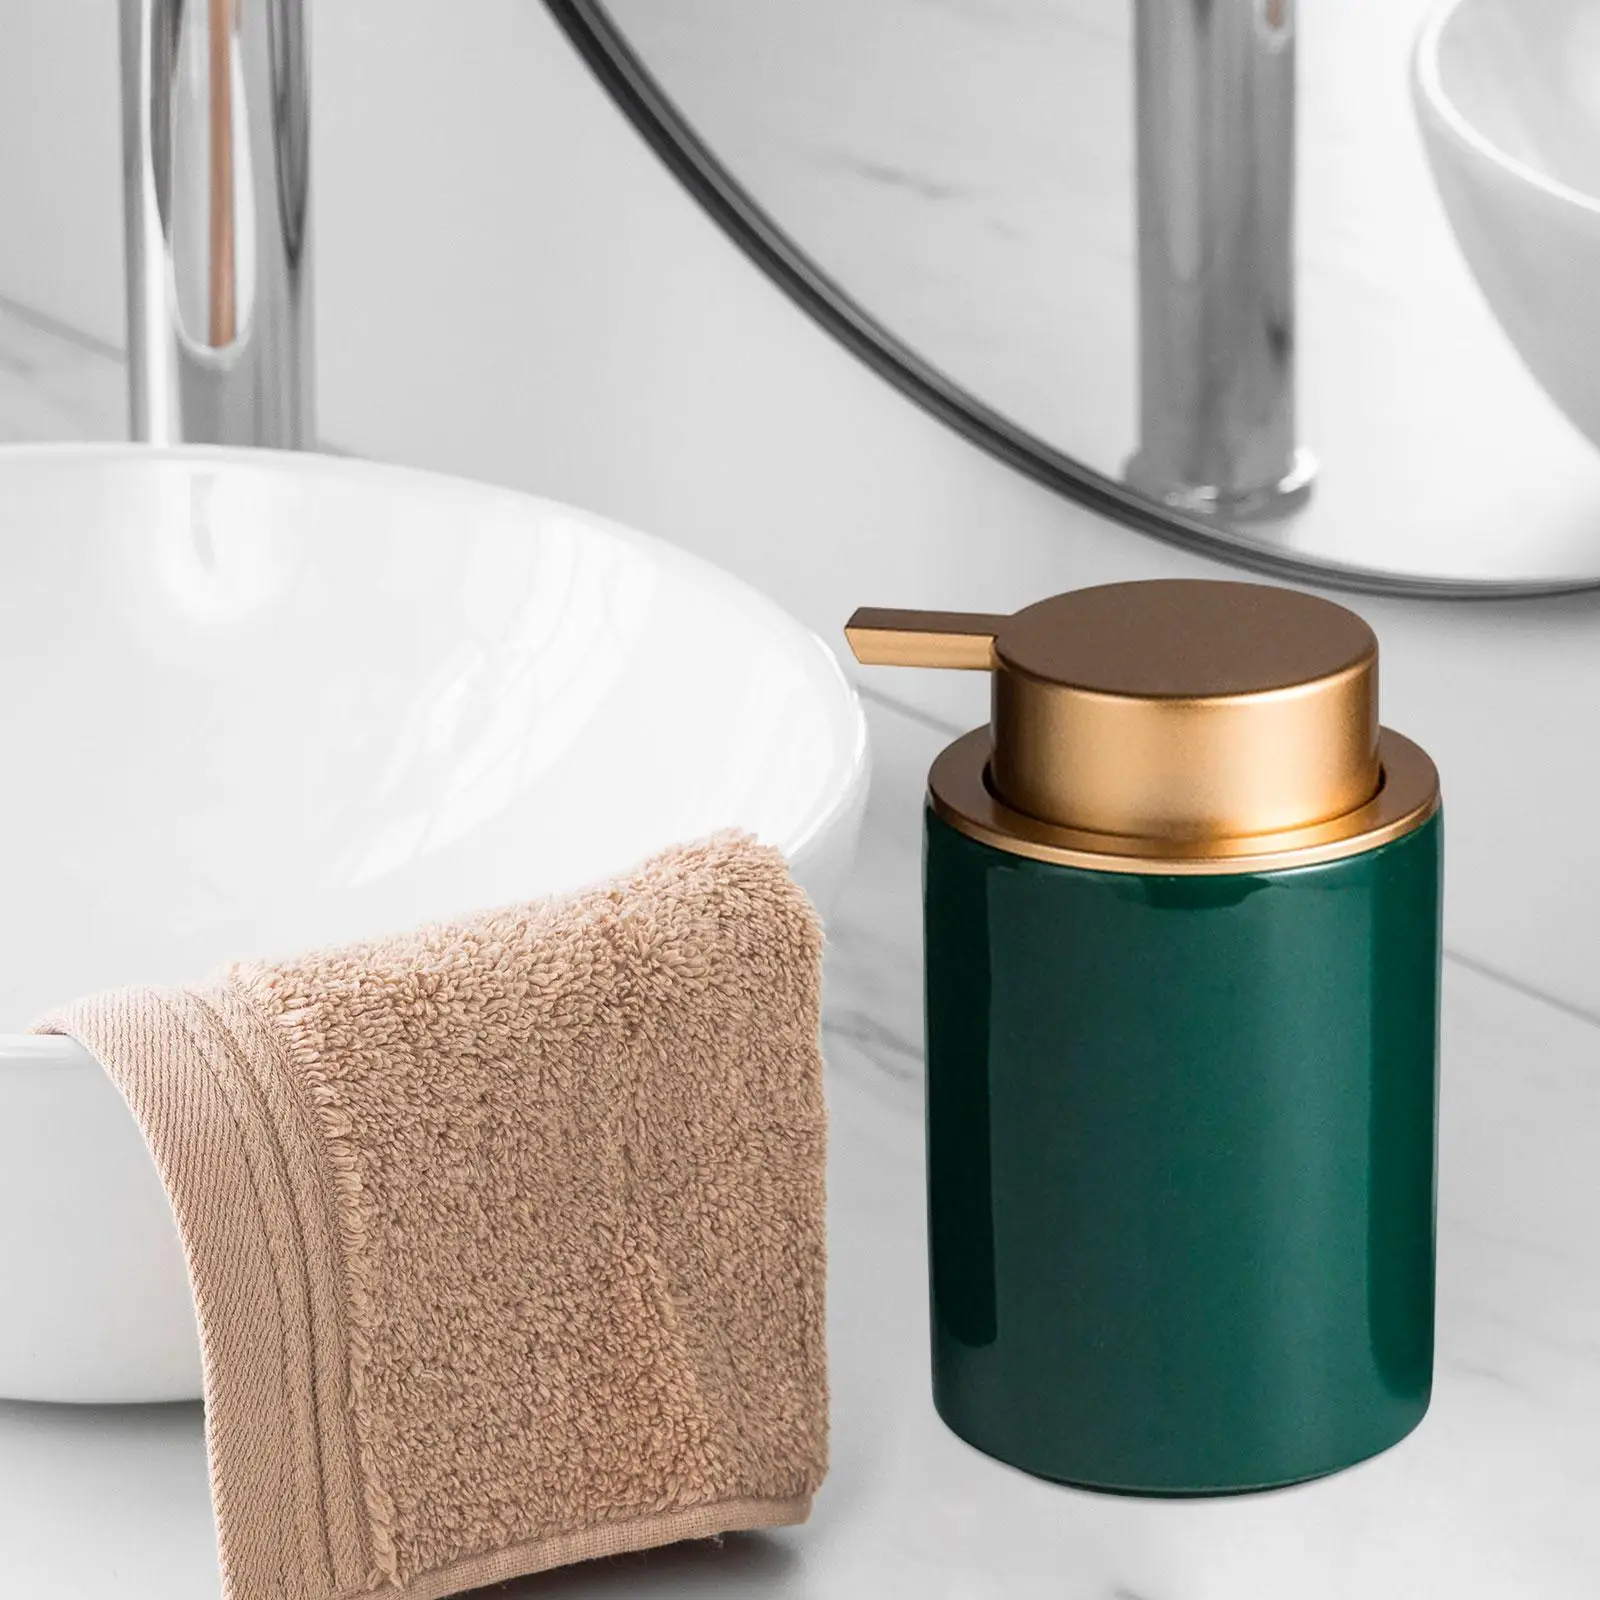 Ceramic Soap Dispenser Manual Lotion Bottle for Office Wash Room Countertop